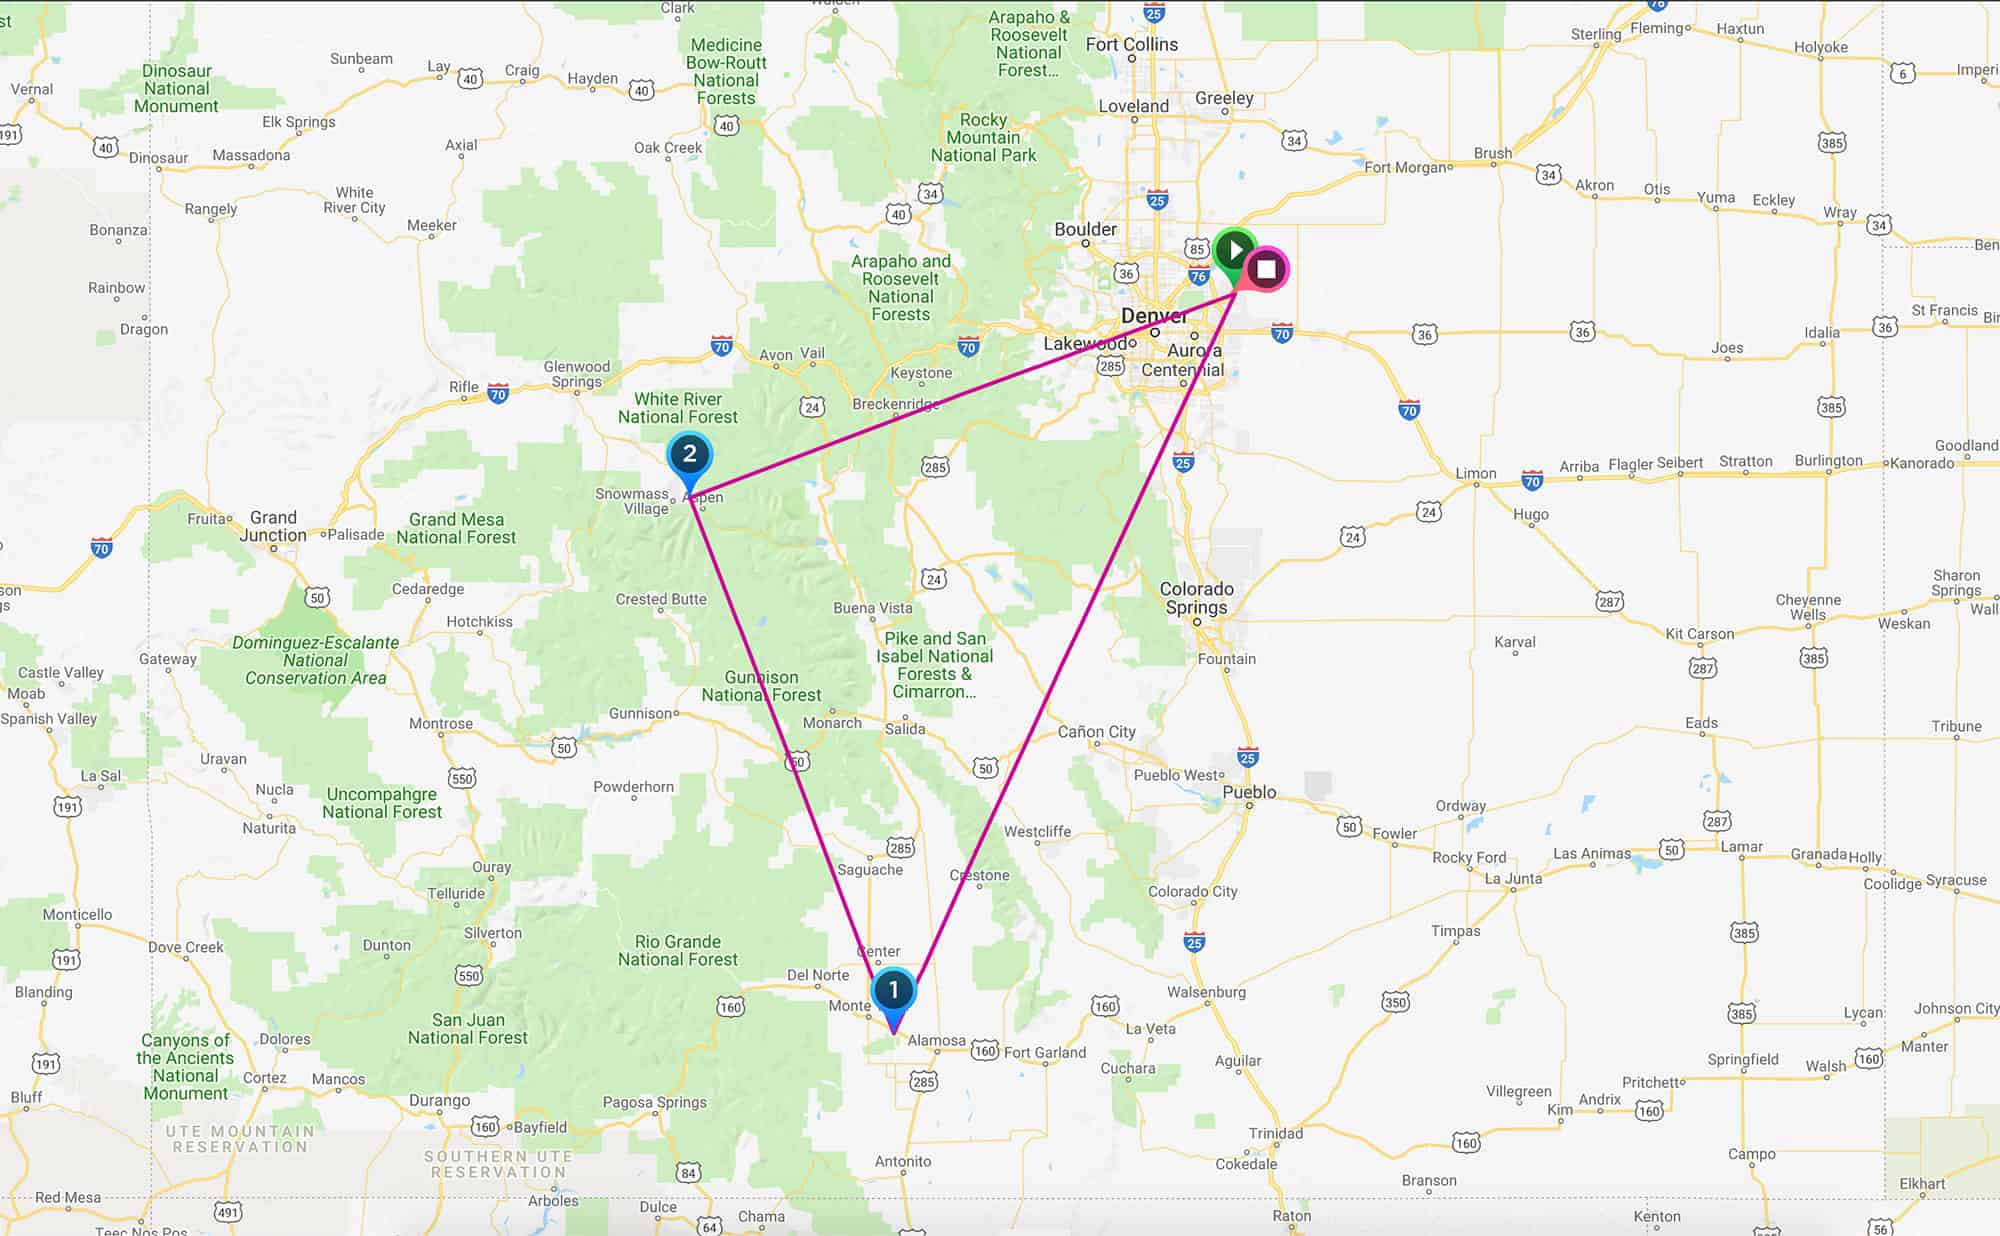 Map of a domestic flight between Denver, Monte Vista (rural airport), and Aspen